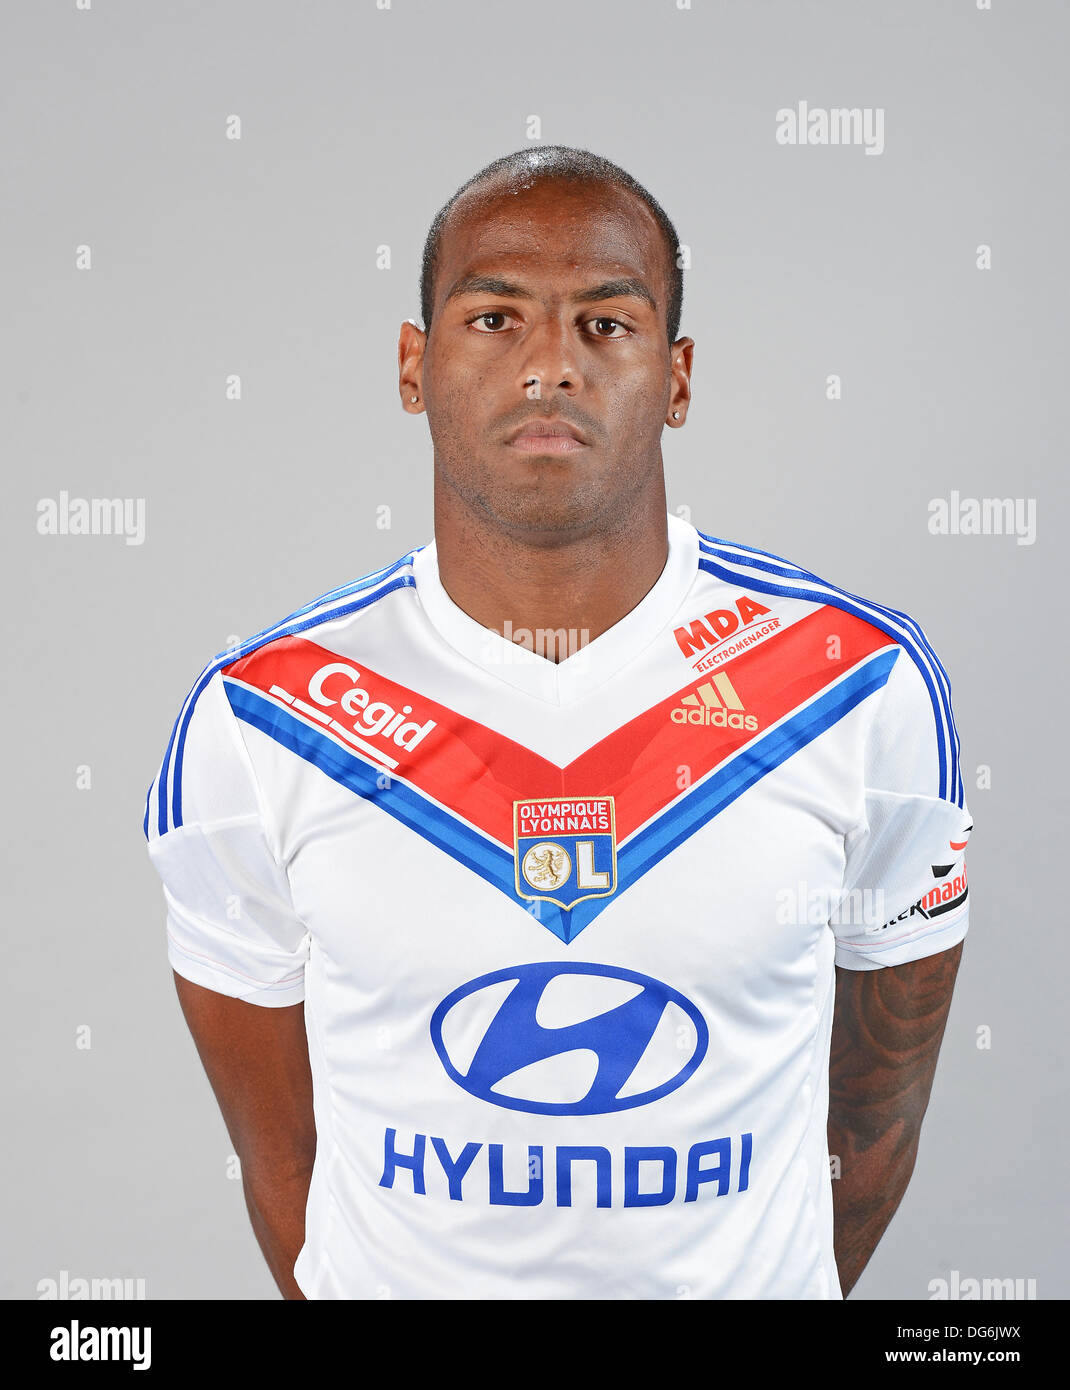 15.10.2013. French League 1 football team Lyon, official photoshoot portraits for season 2013-14. JIMMY BRIAND Stock Photo